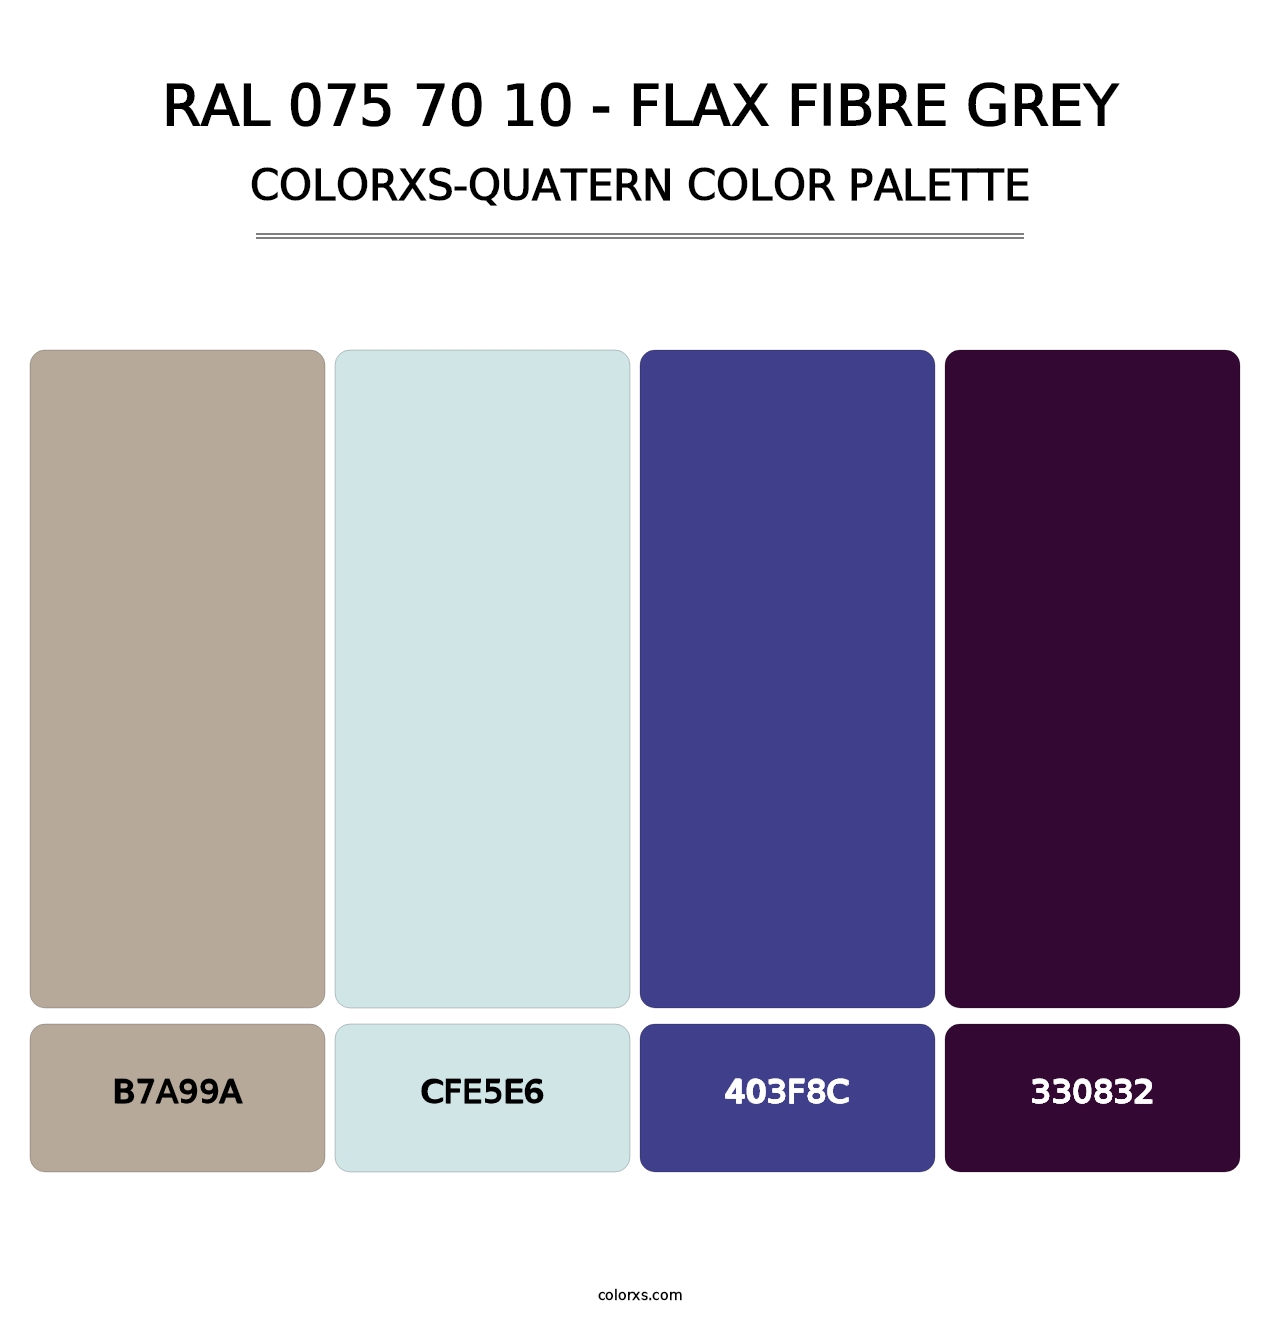 RAL 075 70 10 - Flax Fibre Grey - Colorxs Quatern Palette